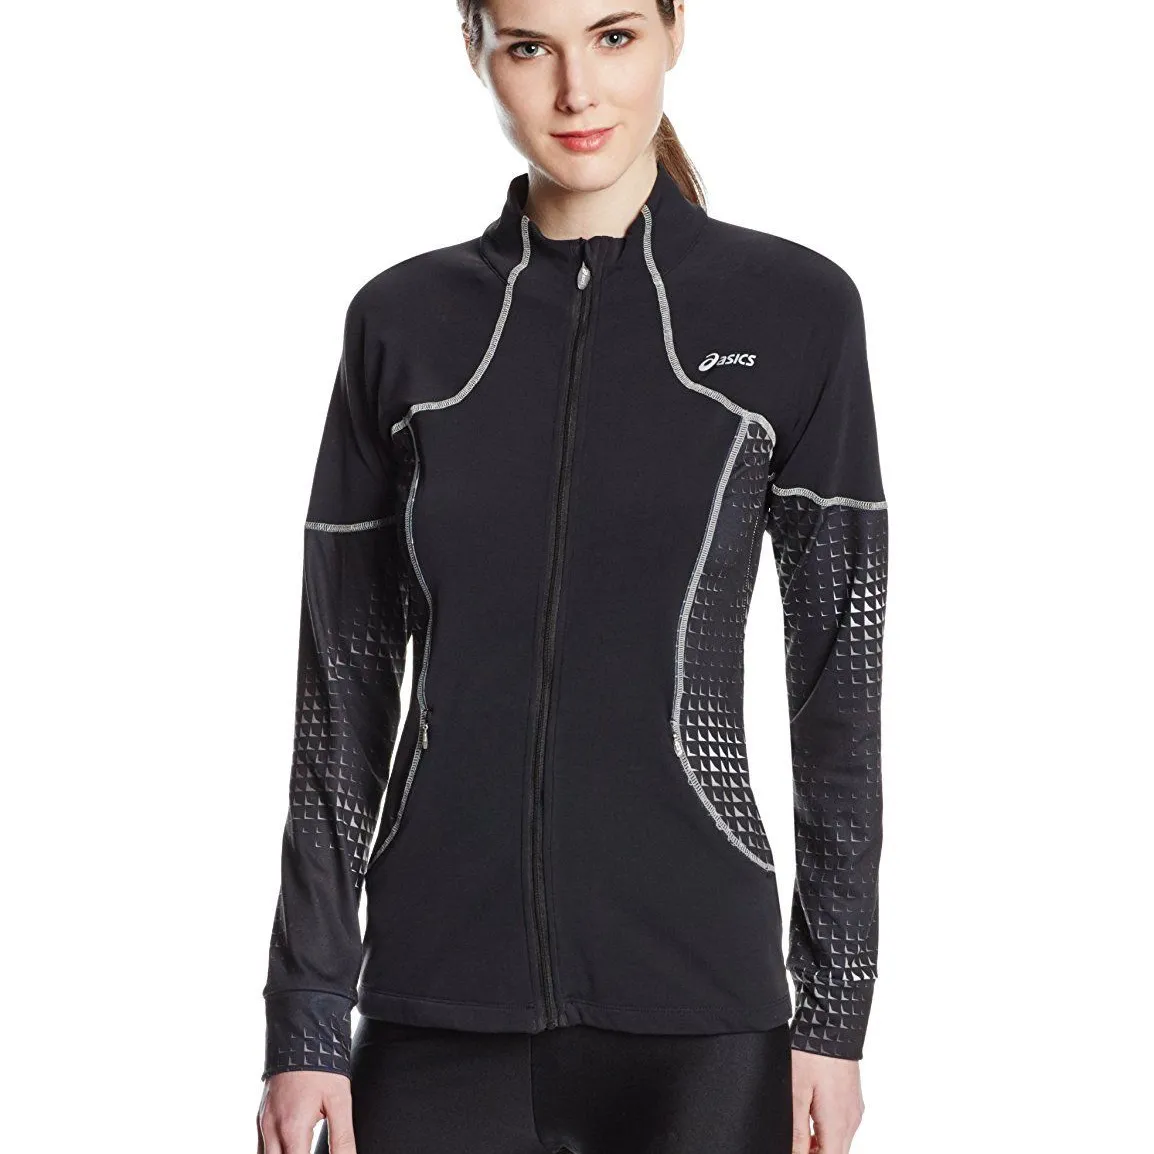 New Asics women lite show jacket style #wt1830: black, x-small photo 1